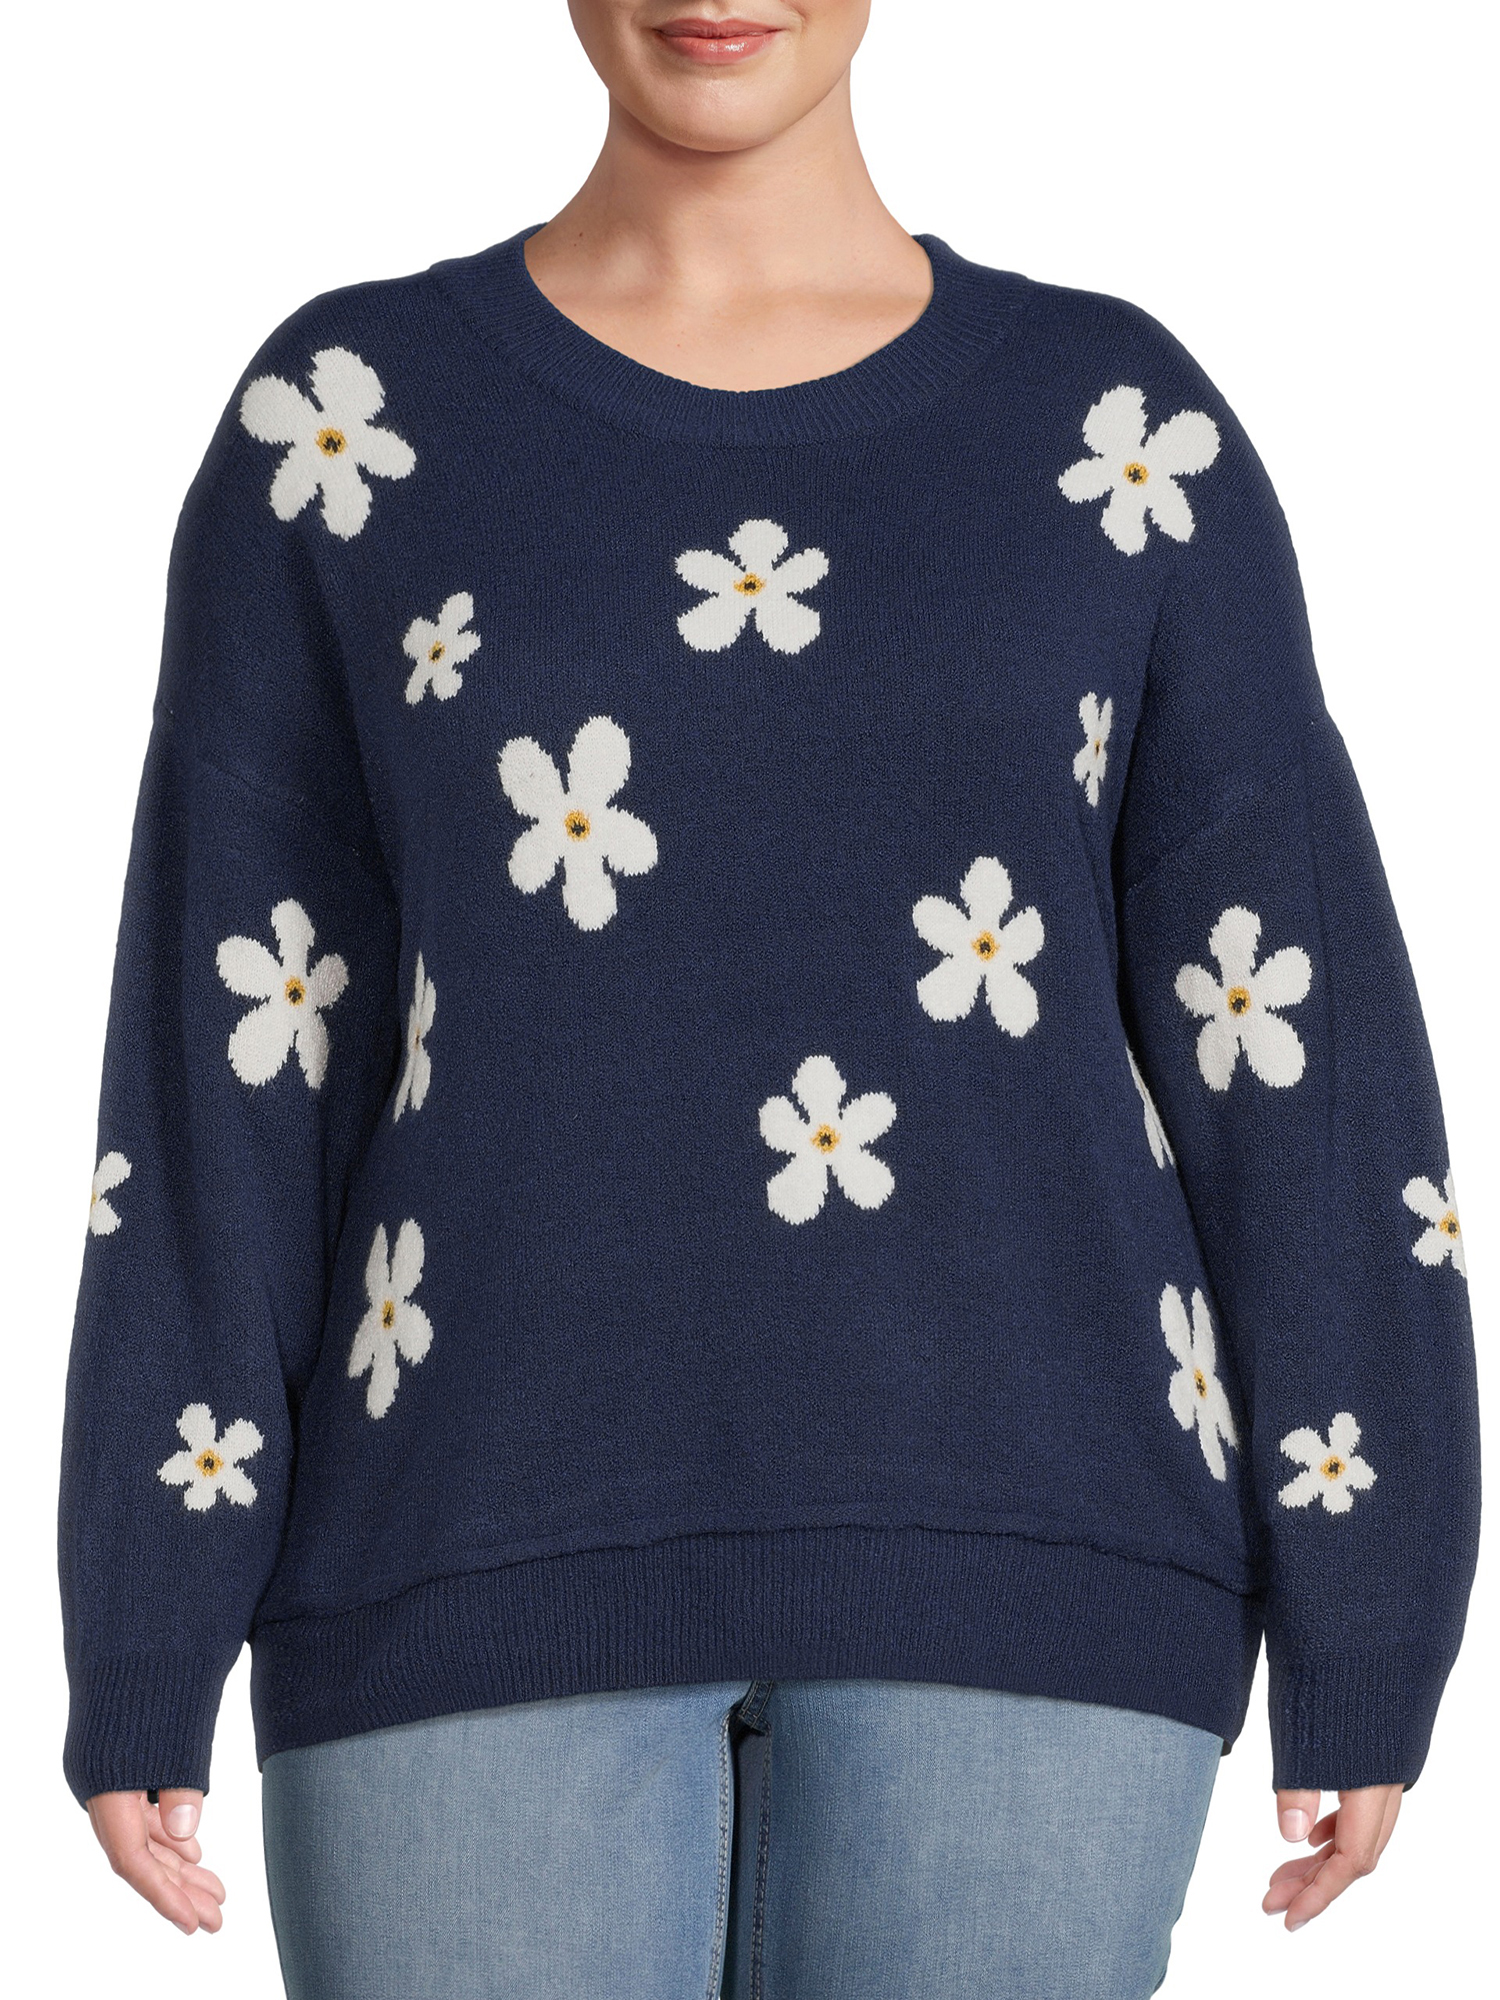 Terra & Sky Women's Plus Size Drop Shoulder Print Sweater, Midweight - image 1 of 5